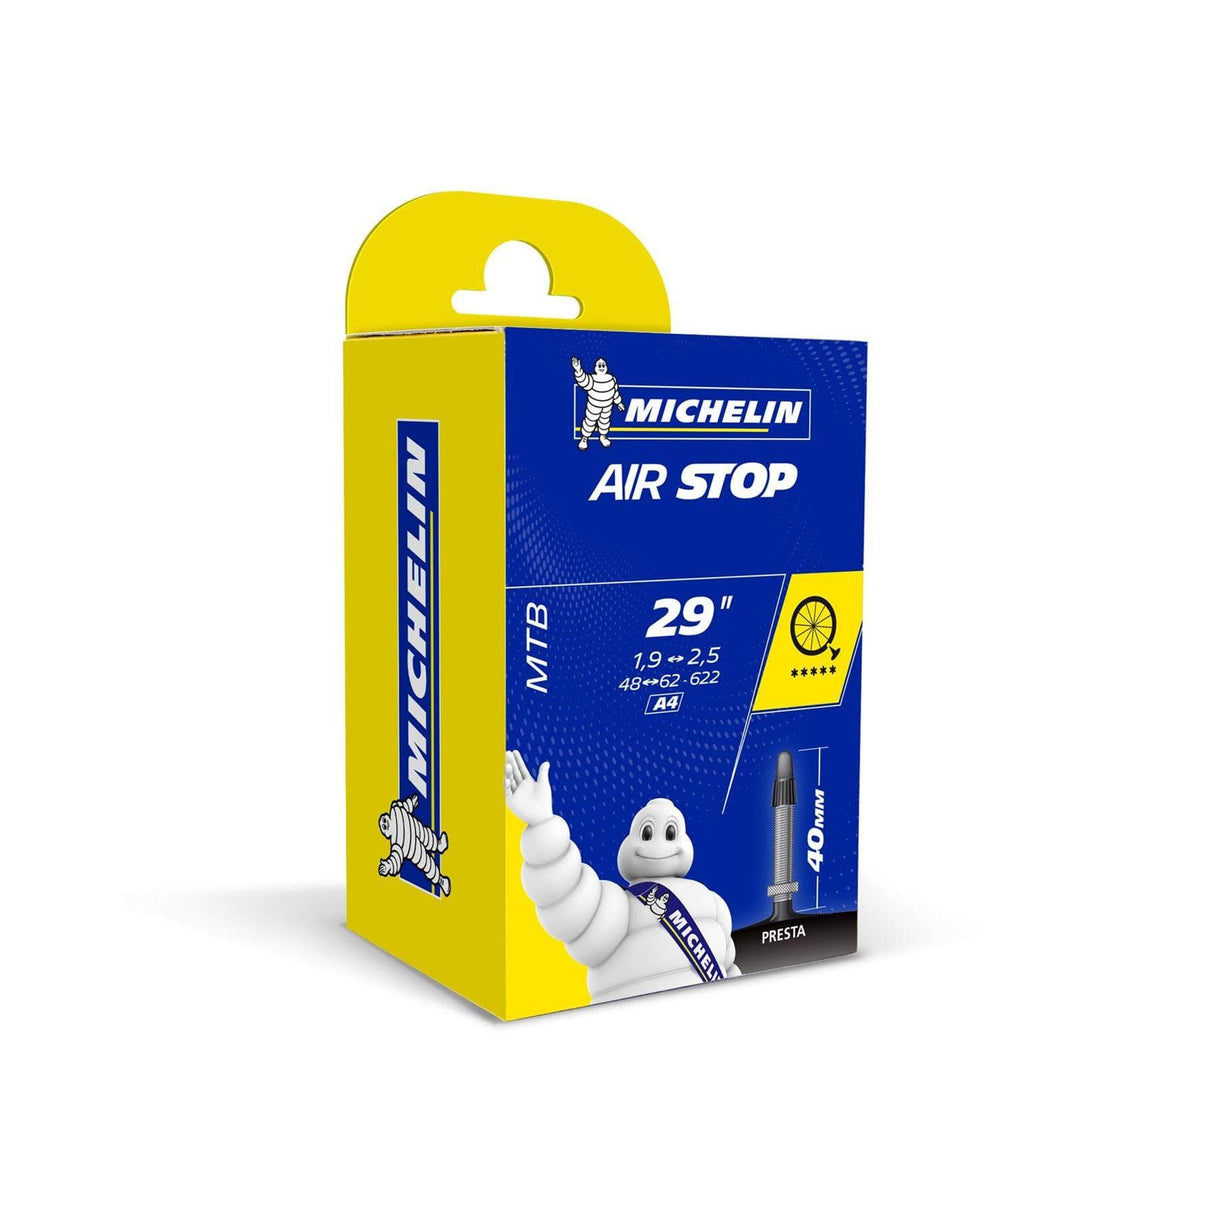 Michelin Airstop MTB Presta Valve Inner Tube - 29" x 1.9-2.5 (40mm Valve)